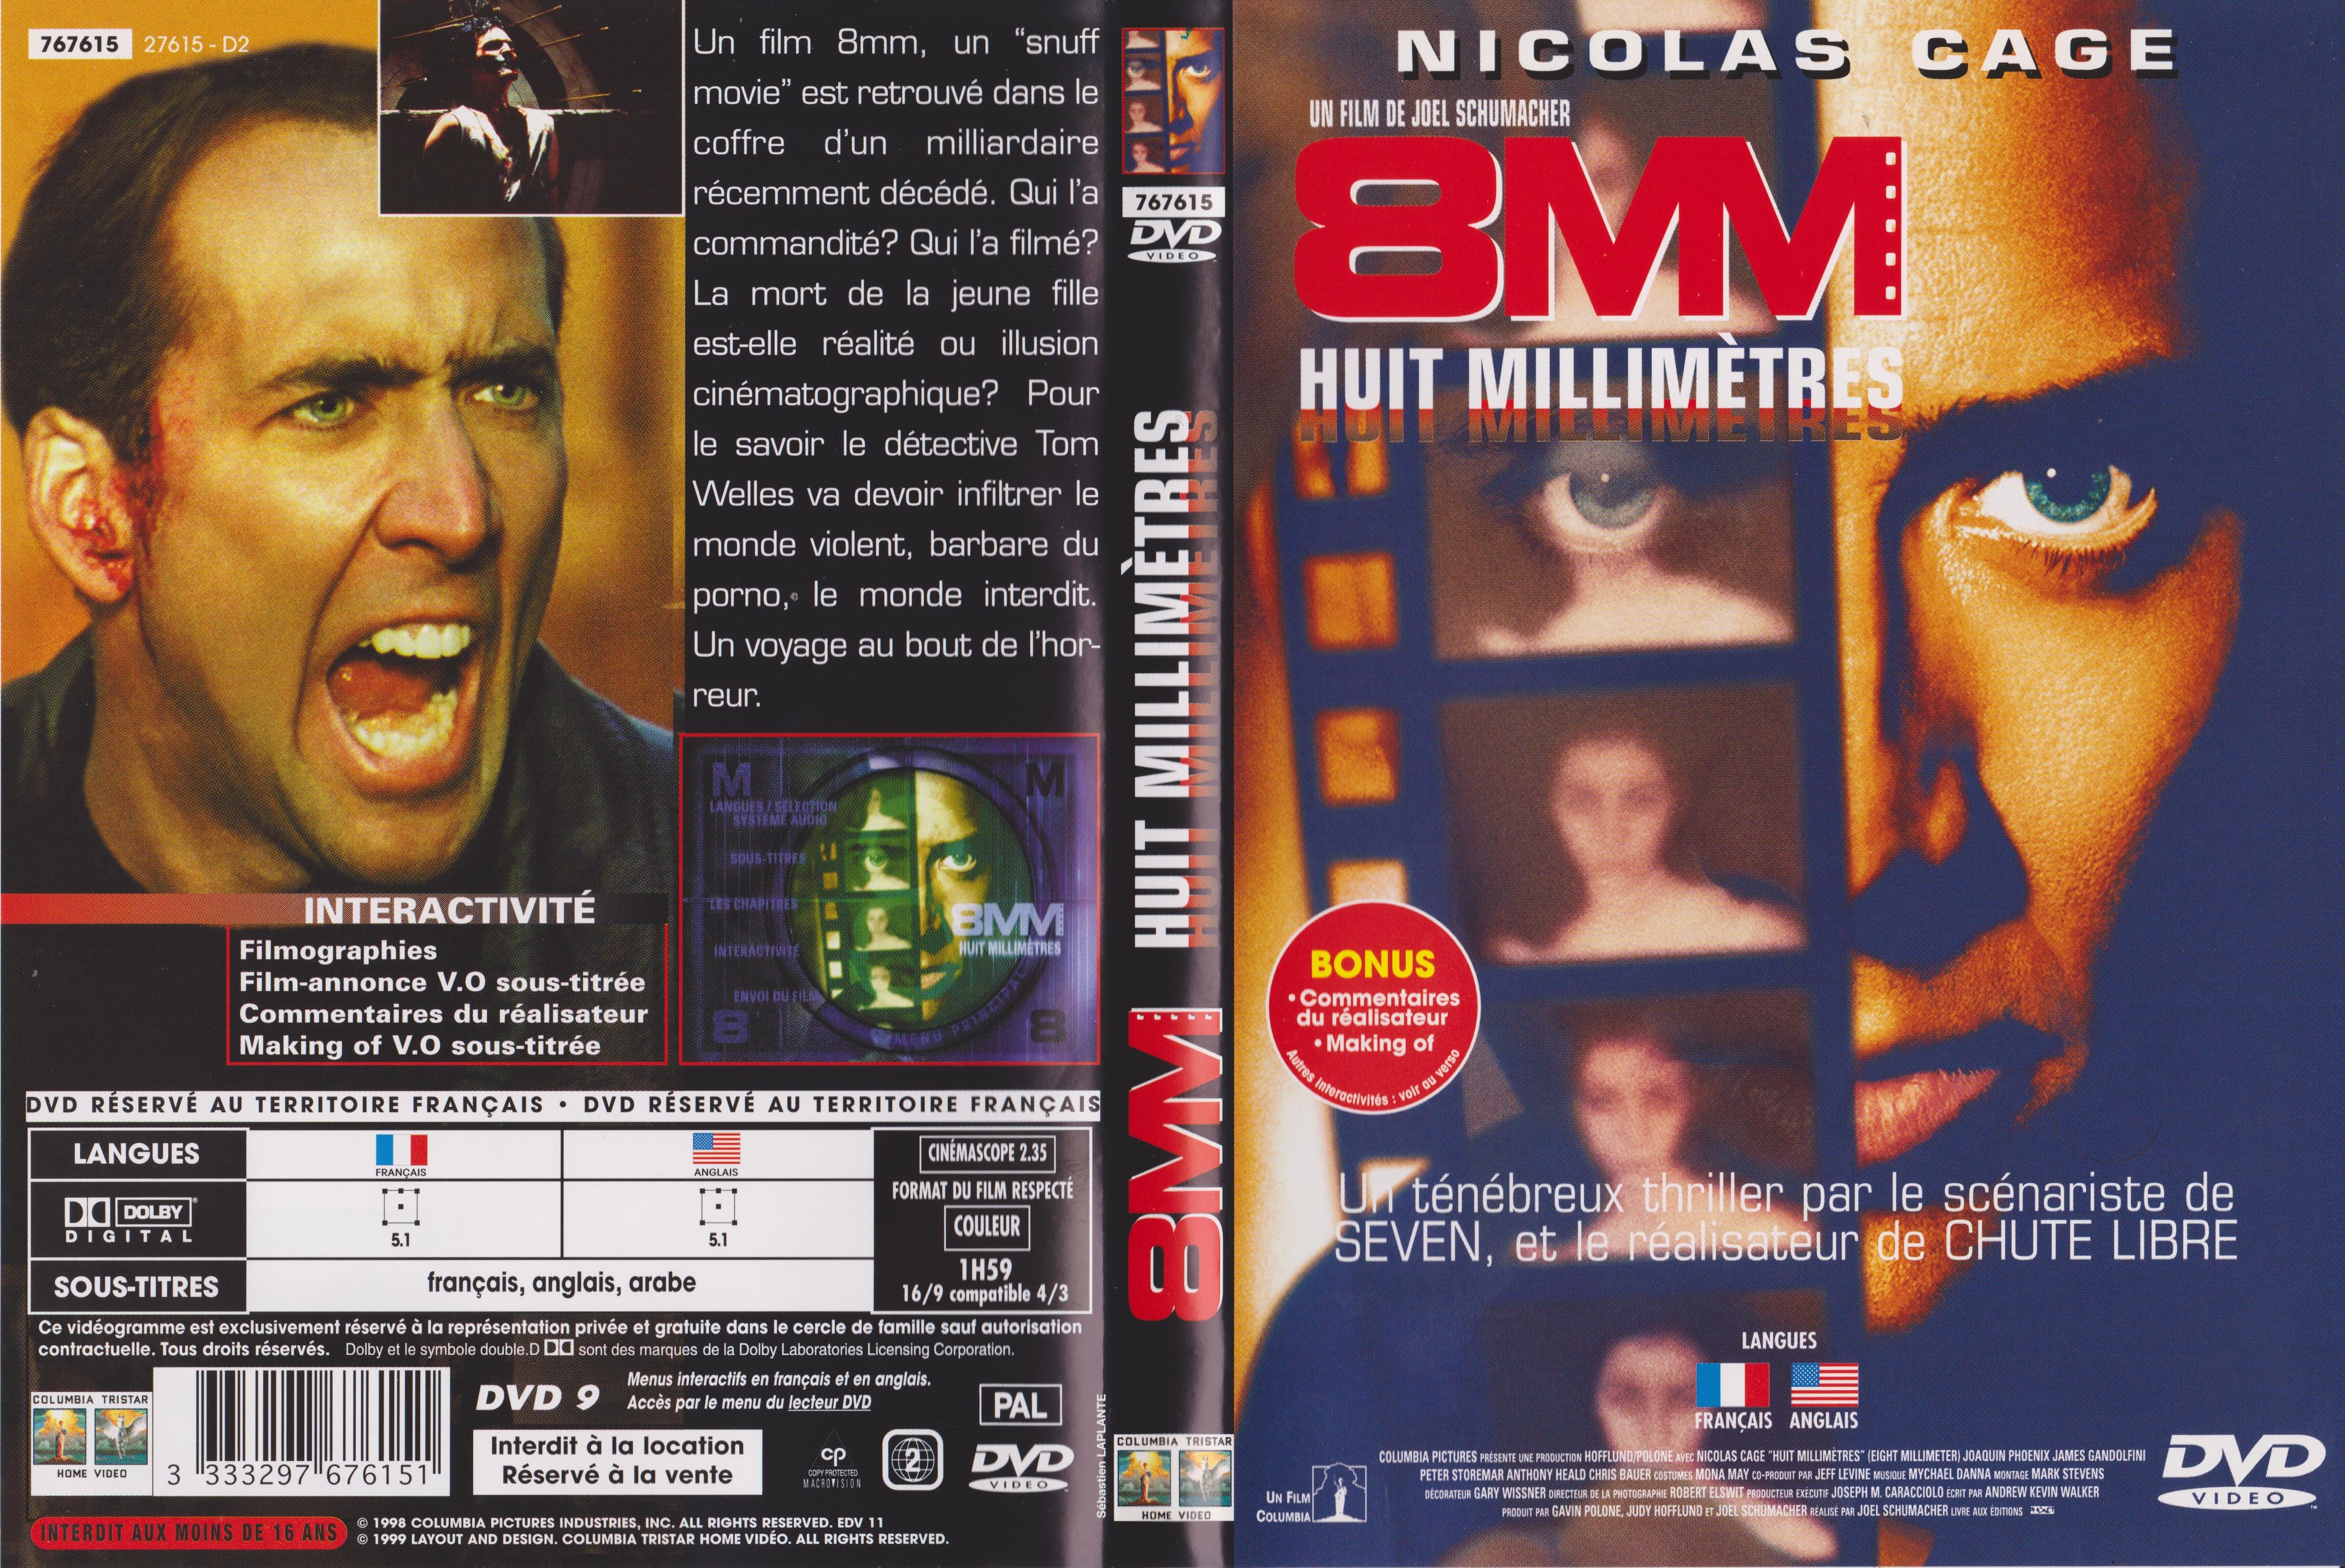 Jaquette DVD 8mm 